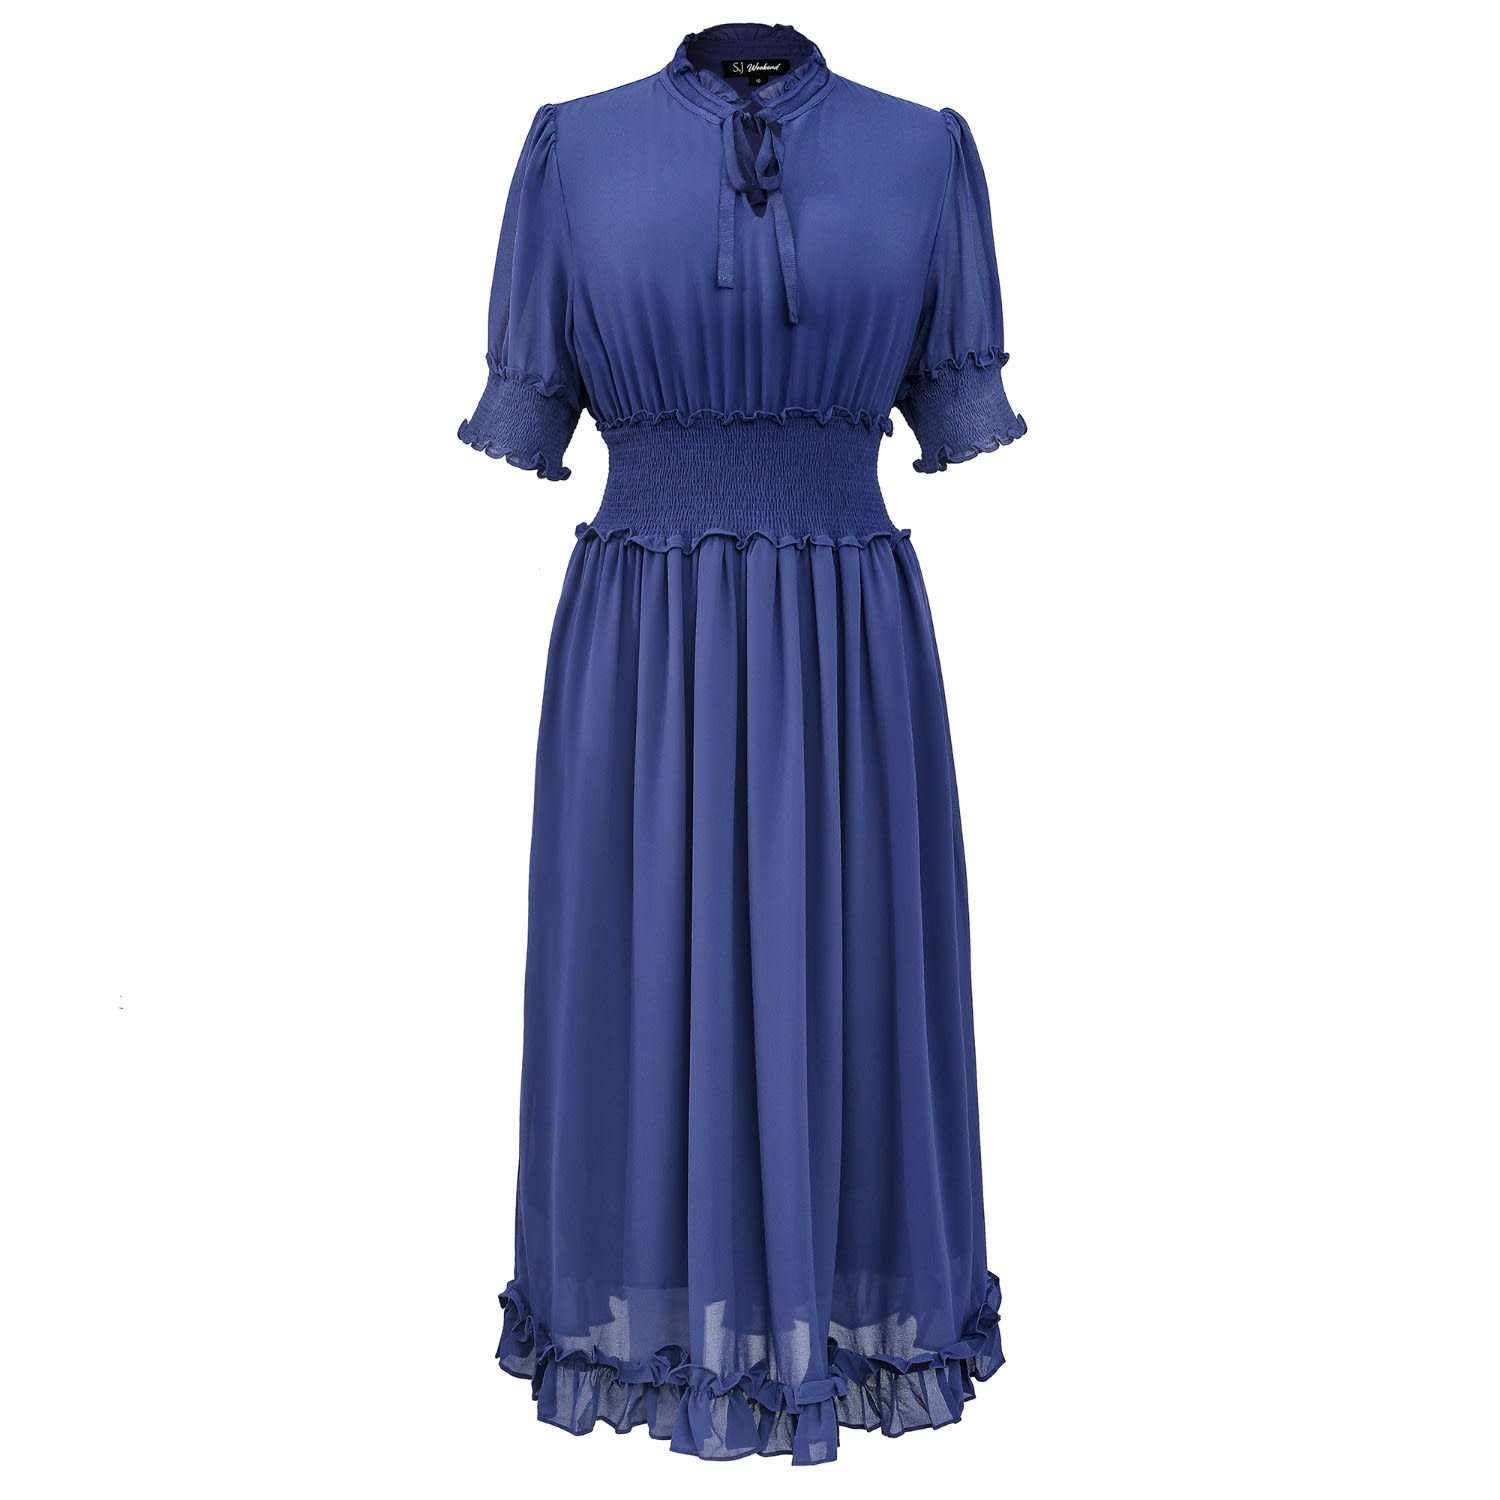 Women’s Chiffon Dress With Smocks And Small Ruffles - Purple-Blue Extra Small Smart and Joy